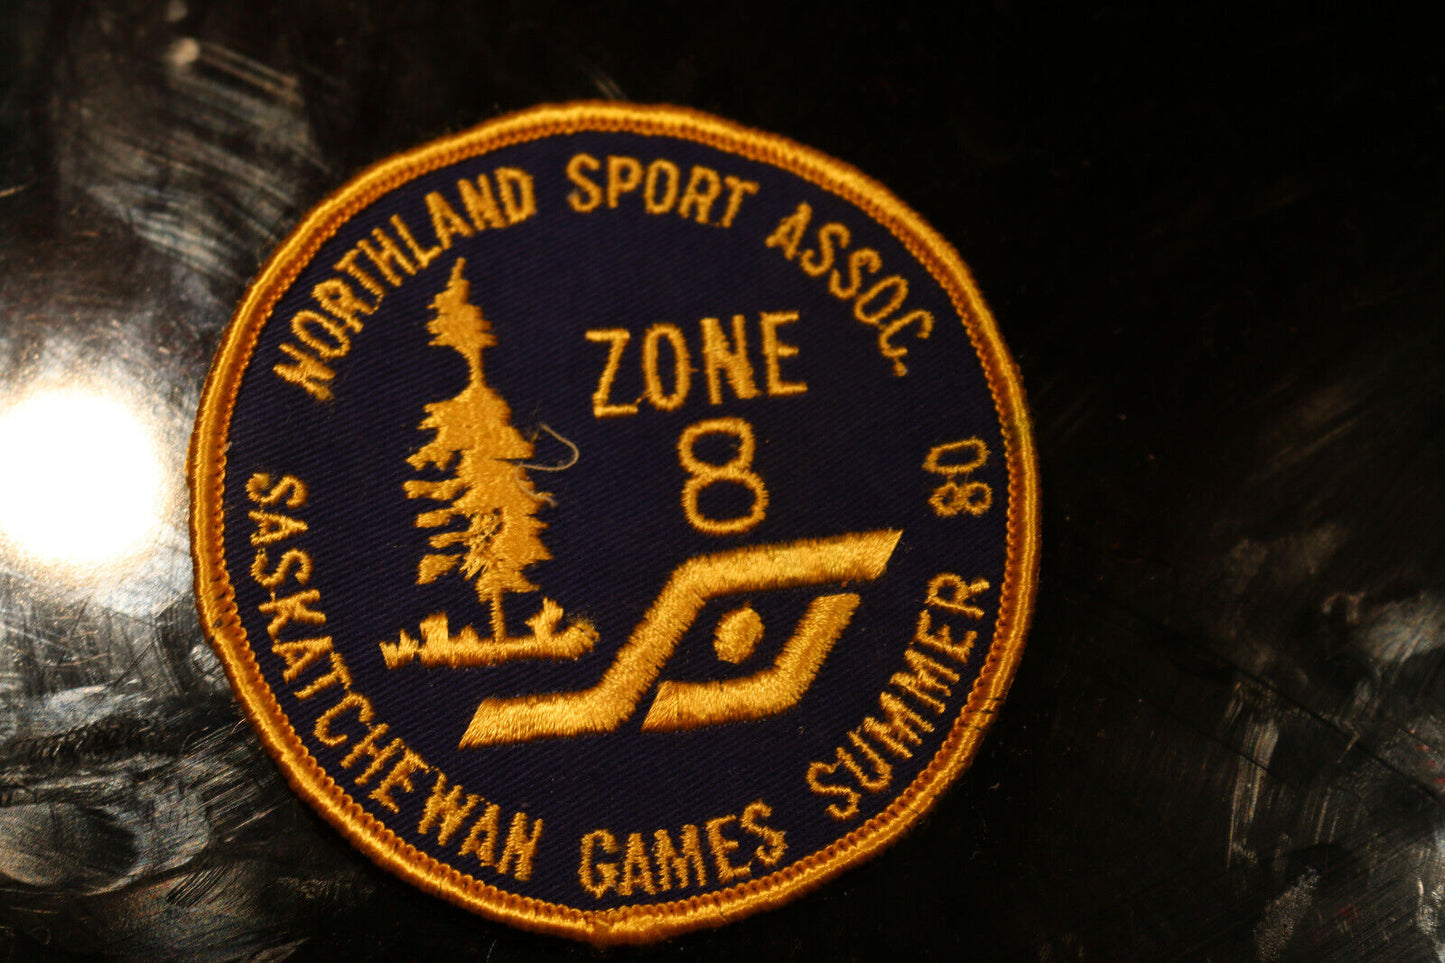 Vintage Shoulder Patche Souvenir Northland Sport Assoc.1980 Summer Games